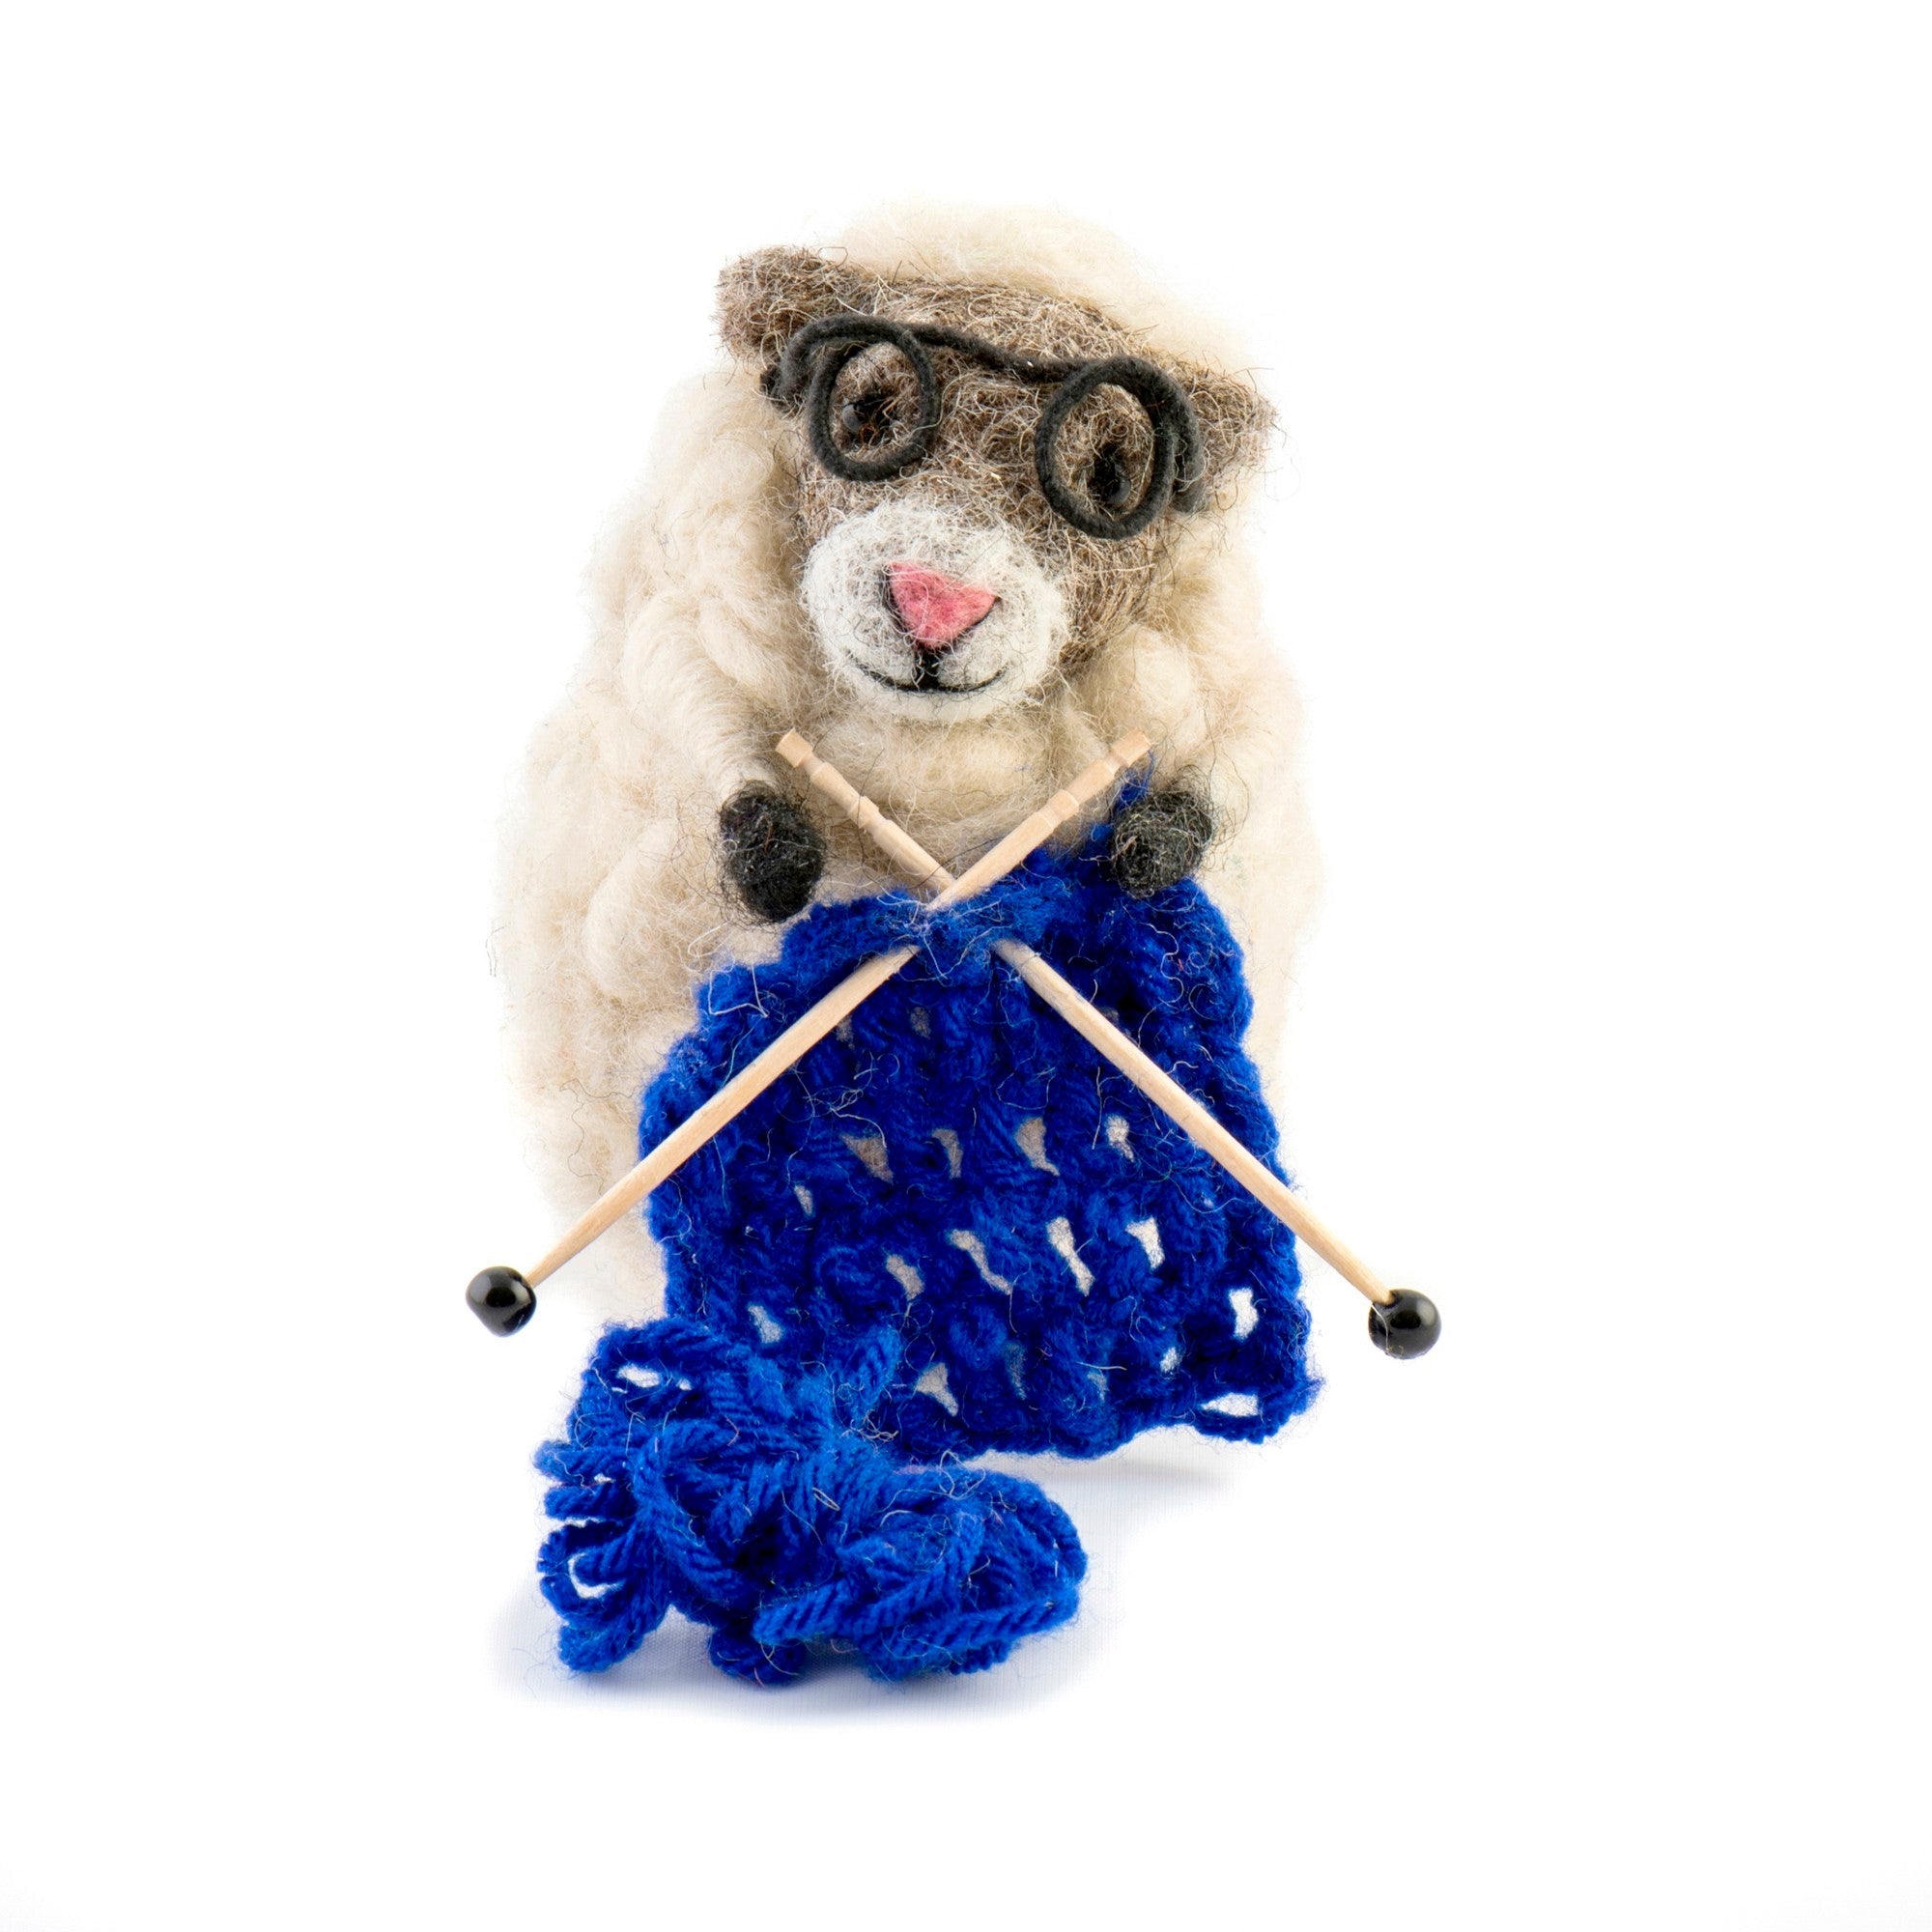 Felt Knitting Nancy Sheep